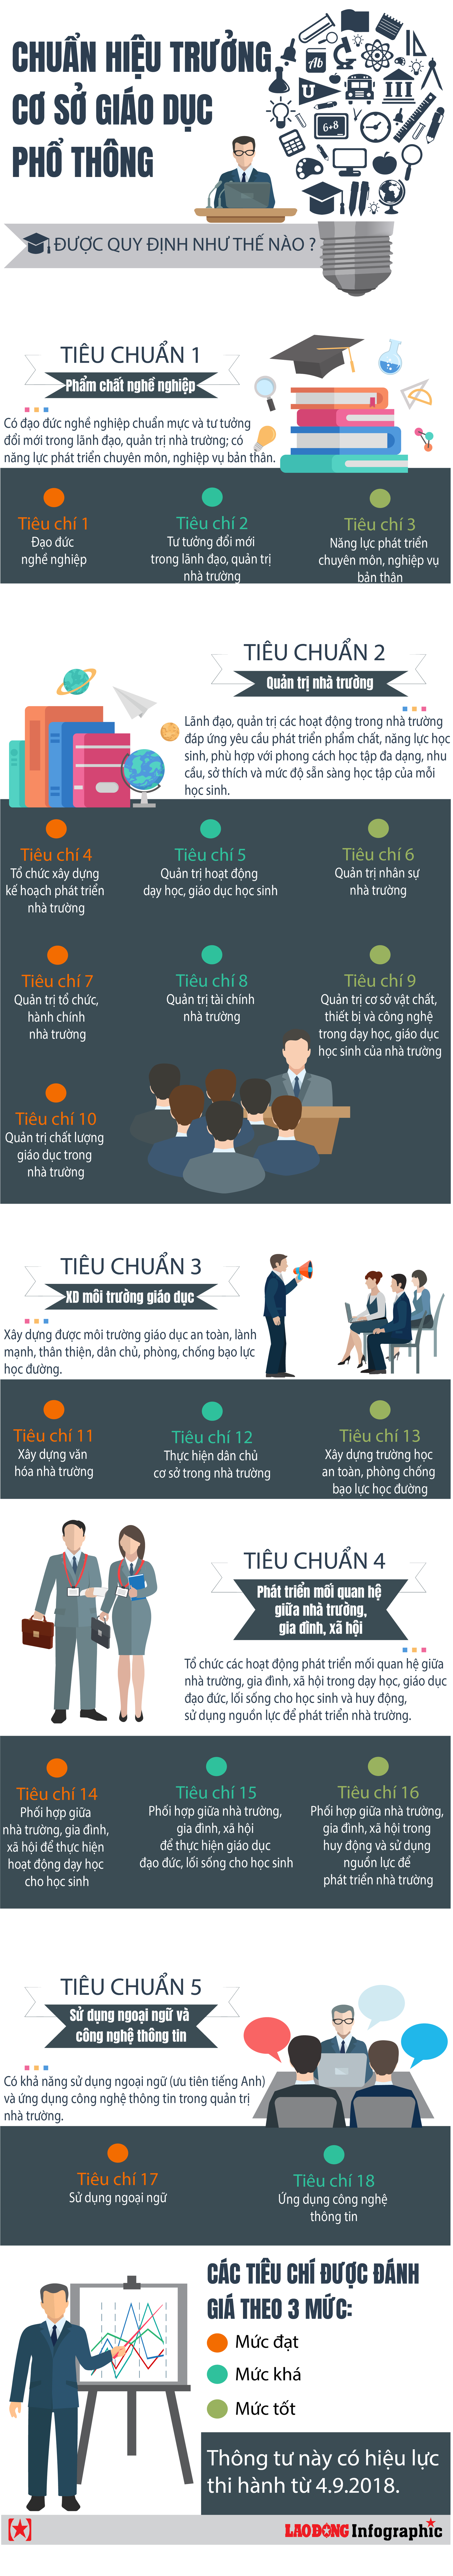 infographic muon tro thanh hieu truong phai dap ung nhung tieu chuan khat khe nao